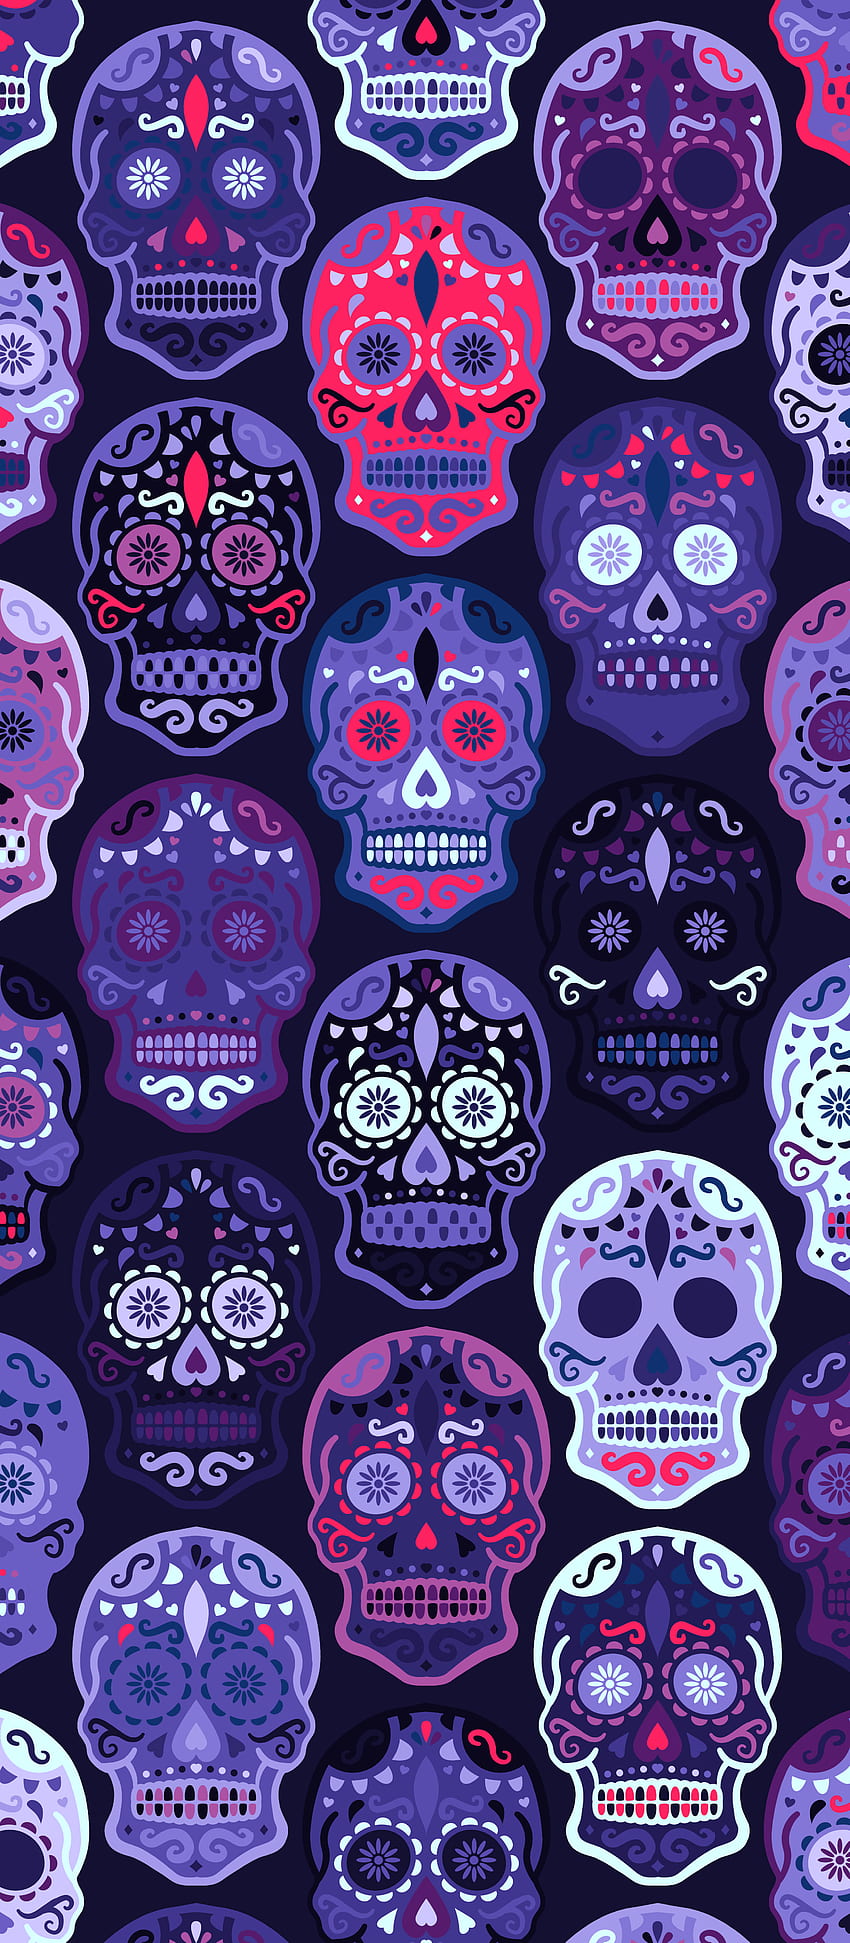 Sugar Skull iPhone X Wallpapers  Wallpaper Cave